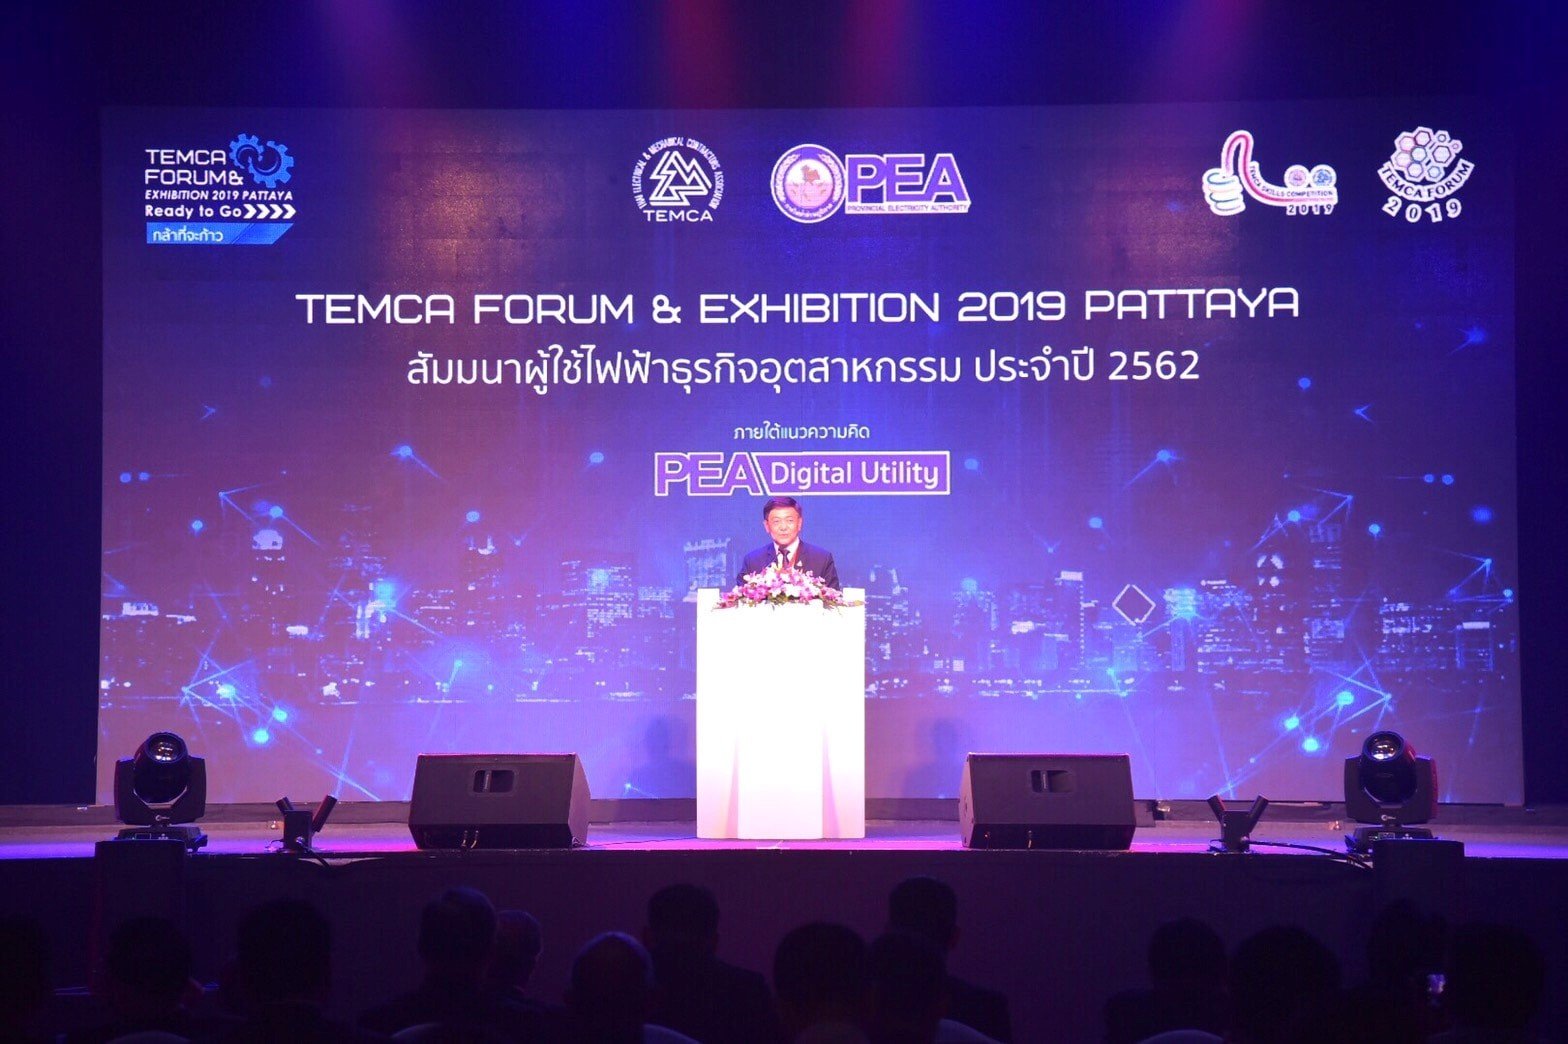 TEMCA Forum & Exhibition 2019